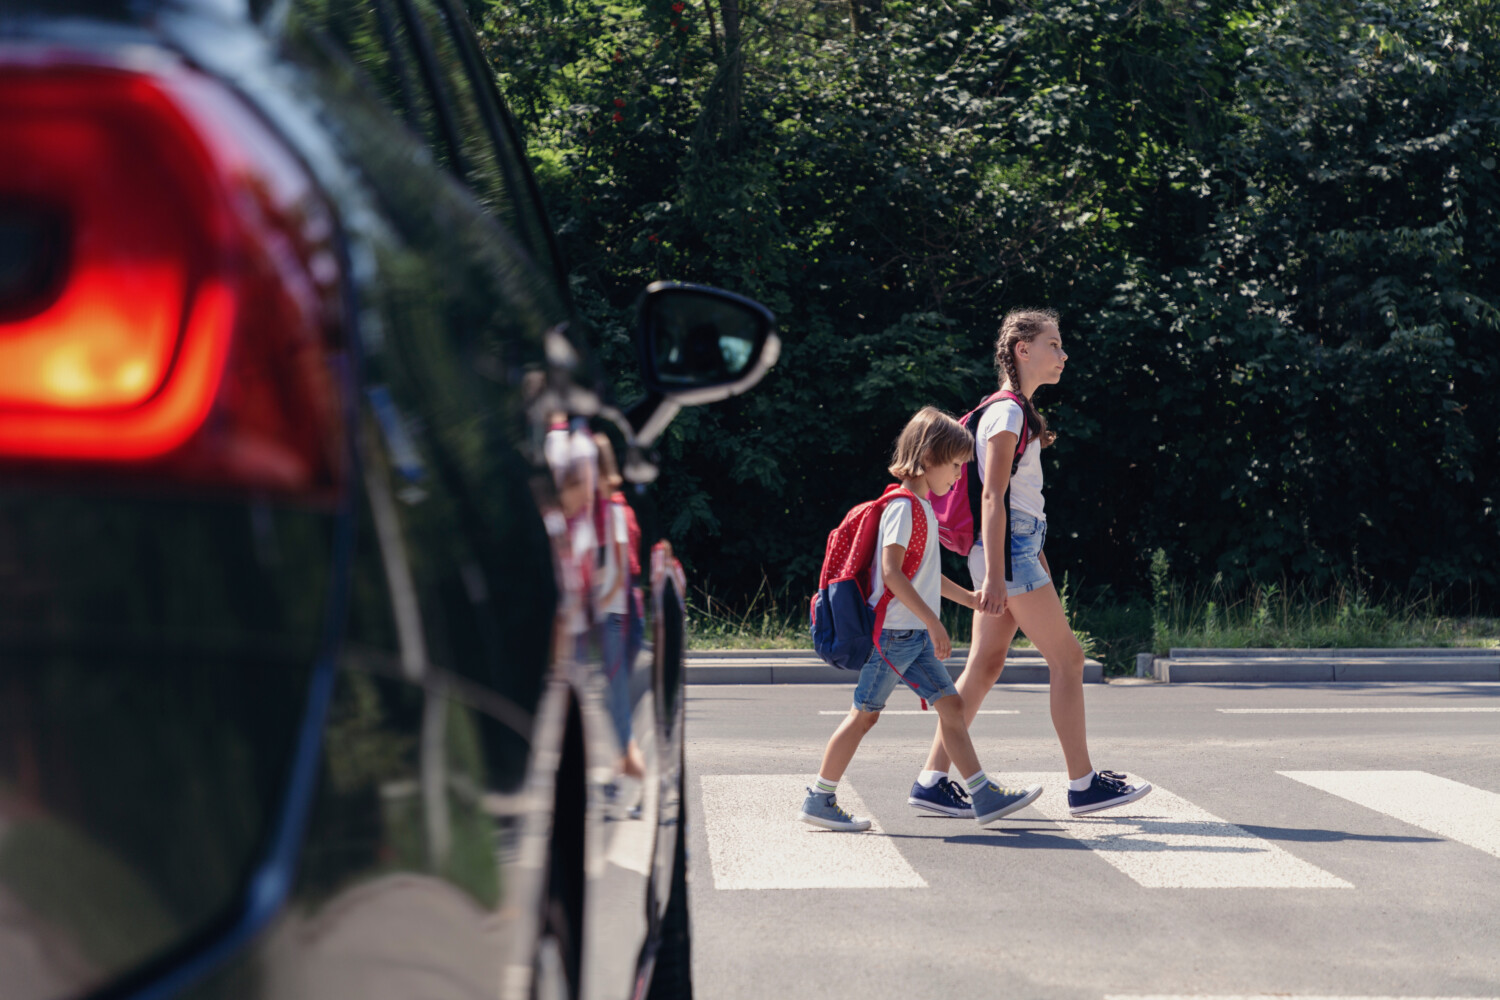 Children next to a car walking